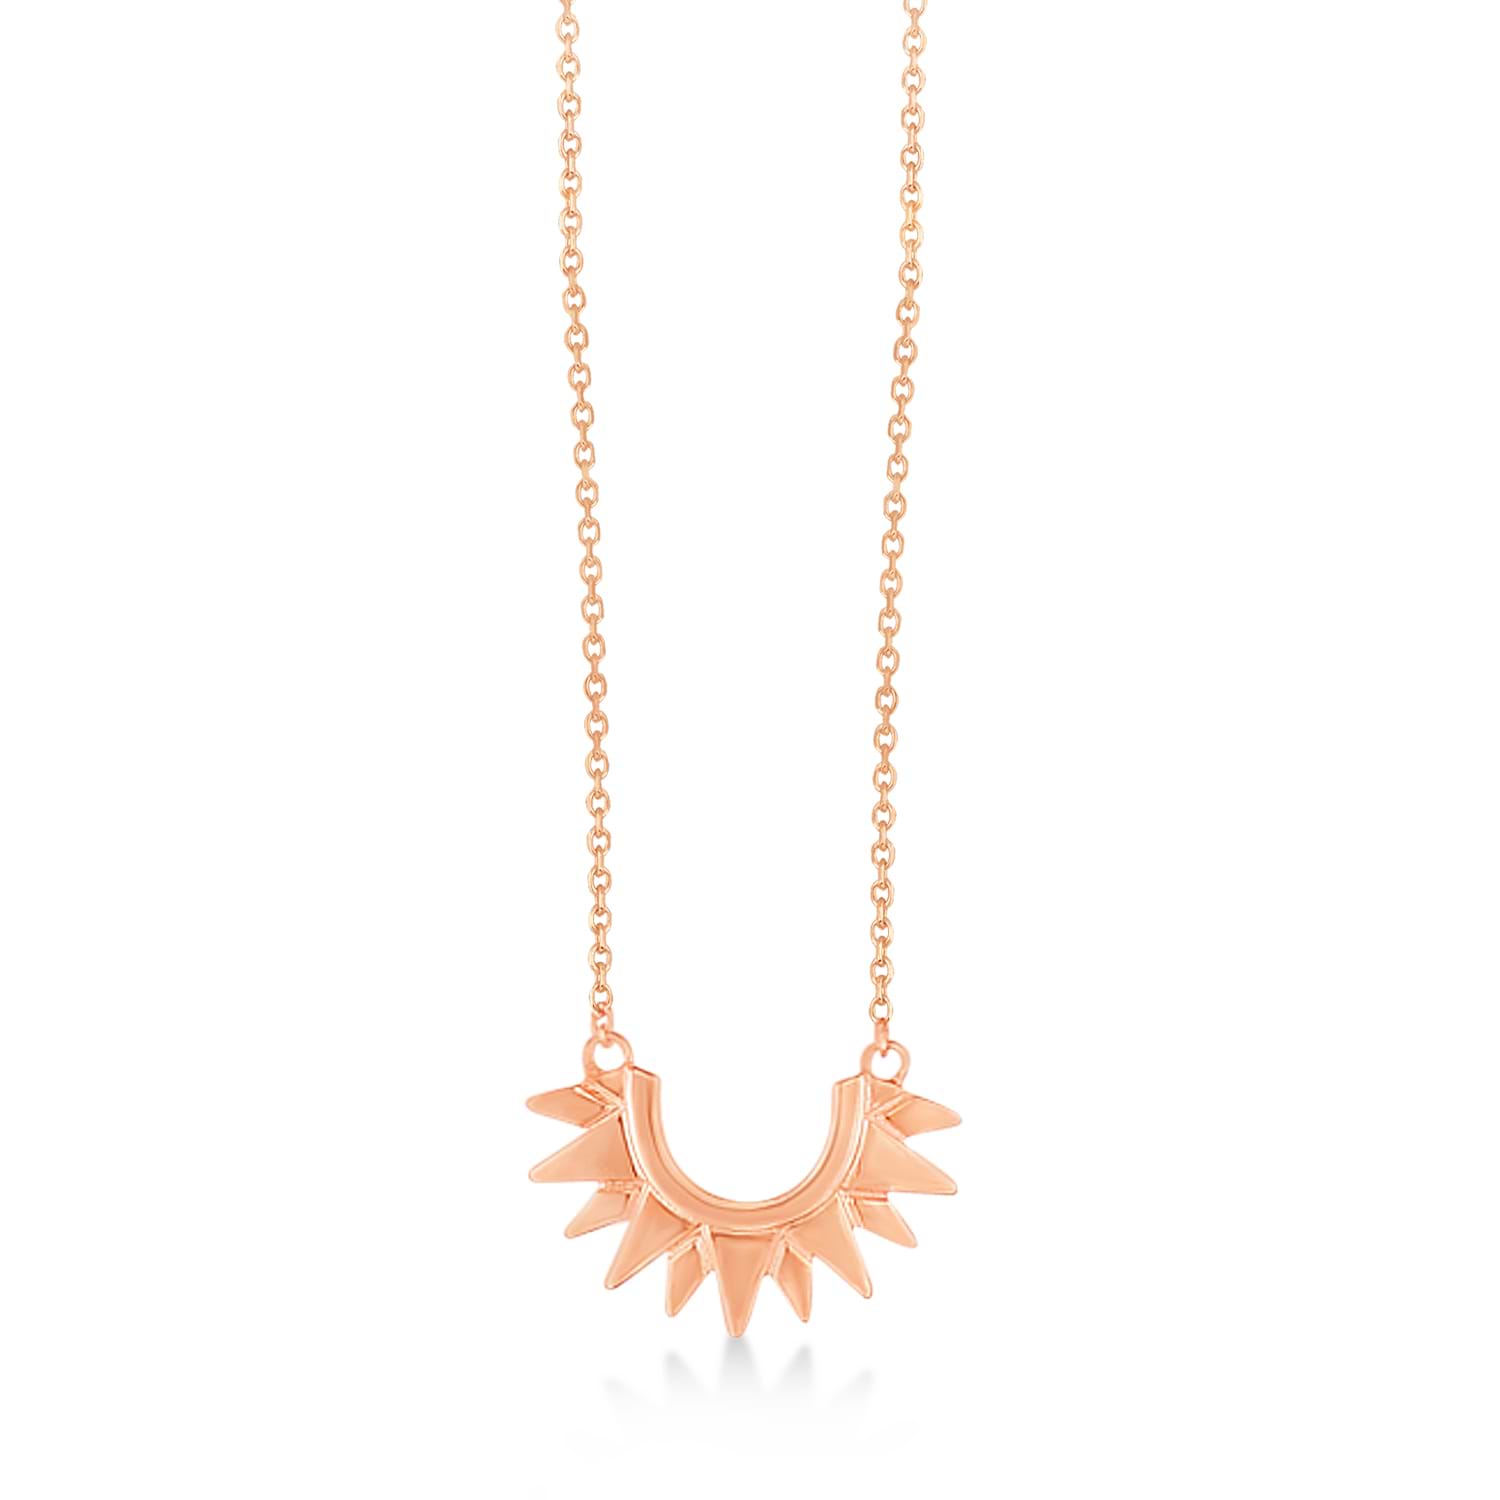 Sunburst Shaped Pendant Necklace 14k Rose Gold